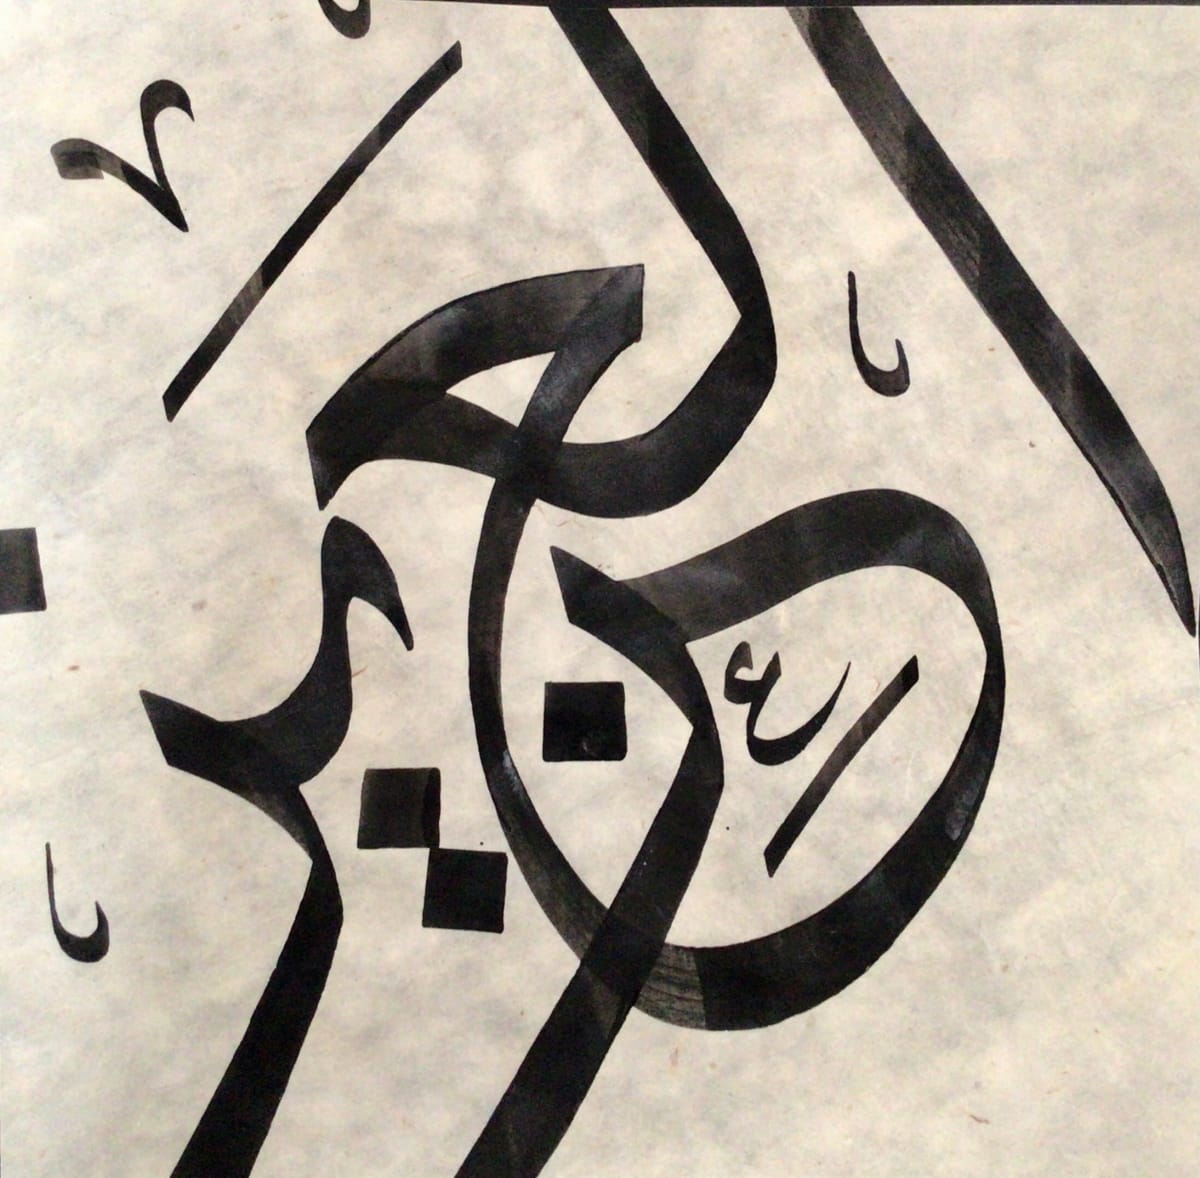 Al-Aziz by Josh Berer 